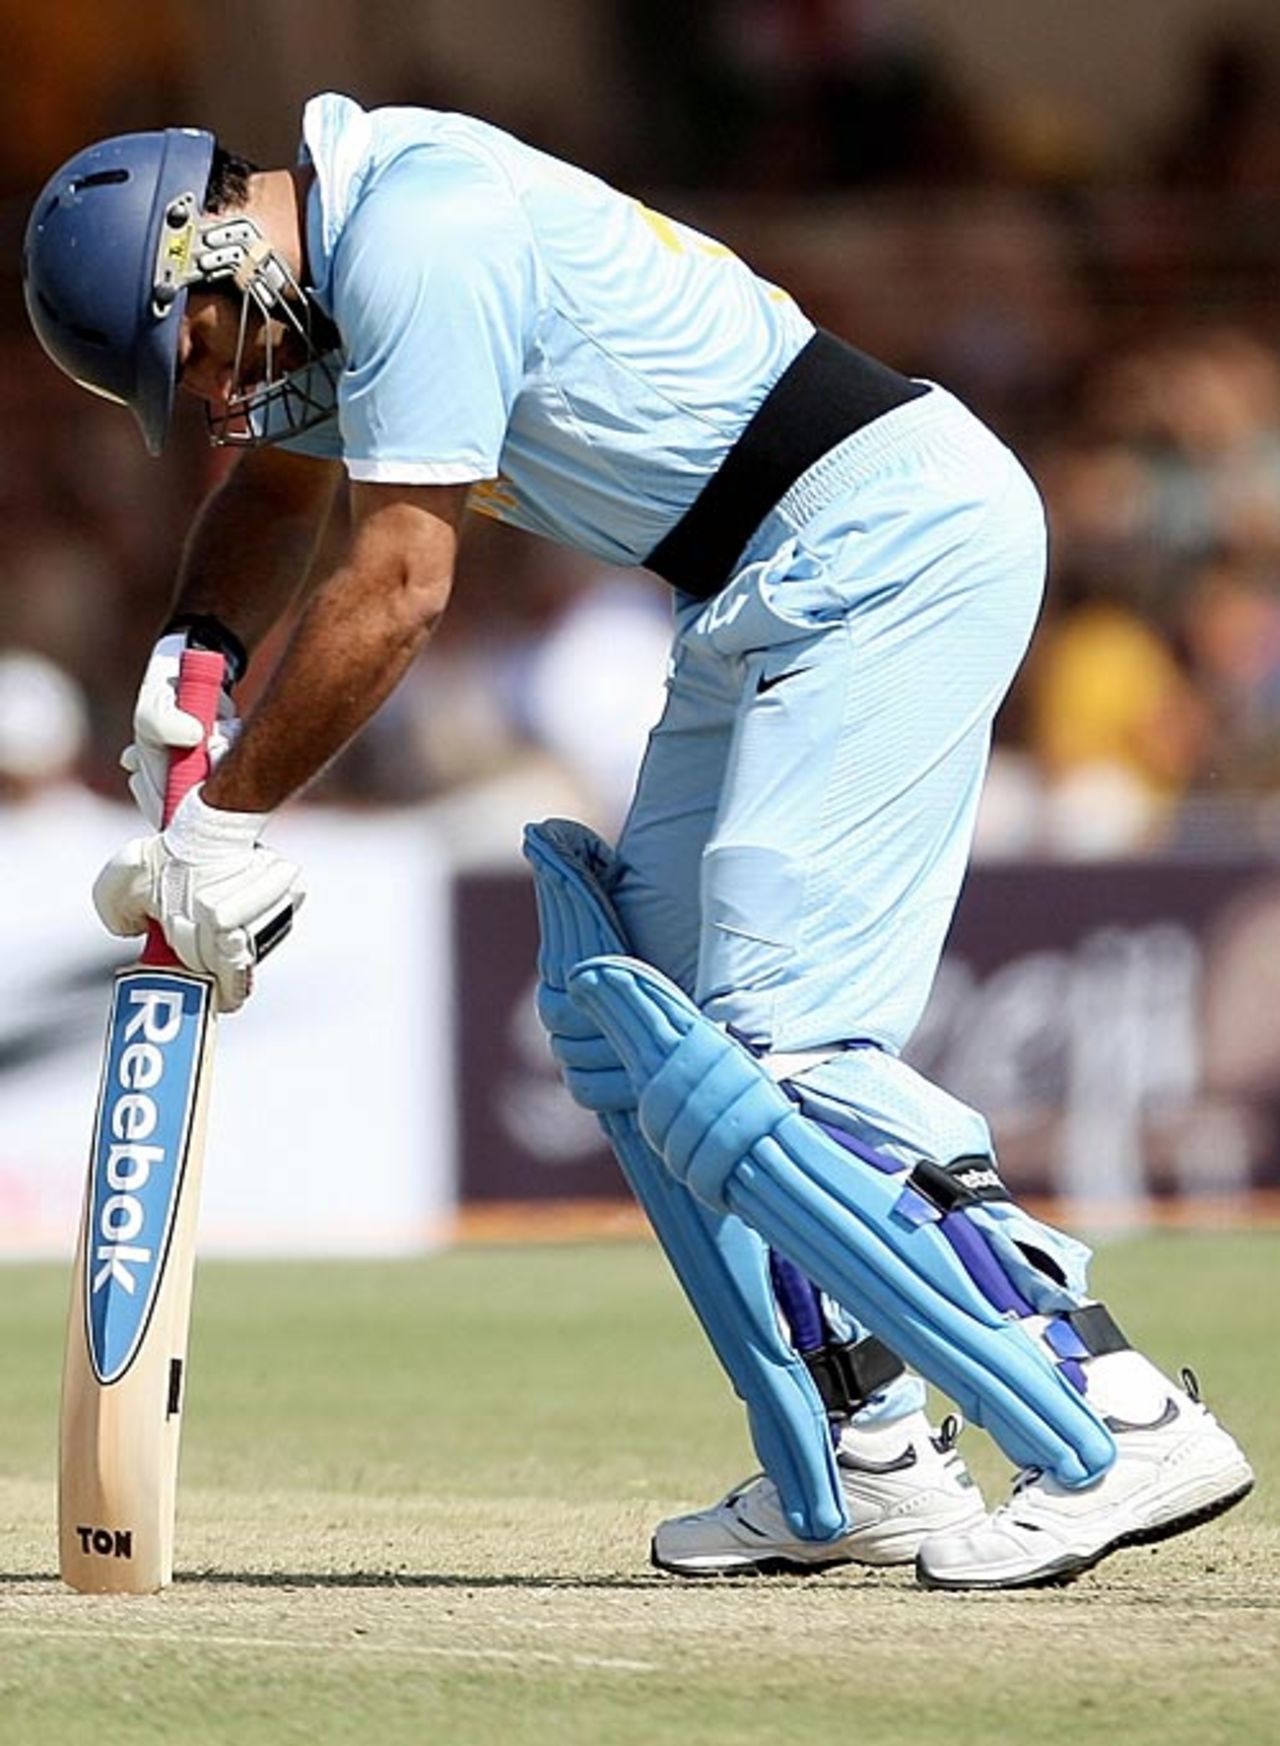 Yuvraj Singh keeps going despite the pain, India v England, 1st ODI, Rajkot, November 14, 2008